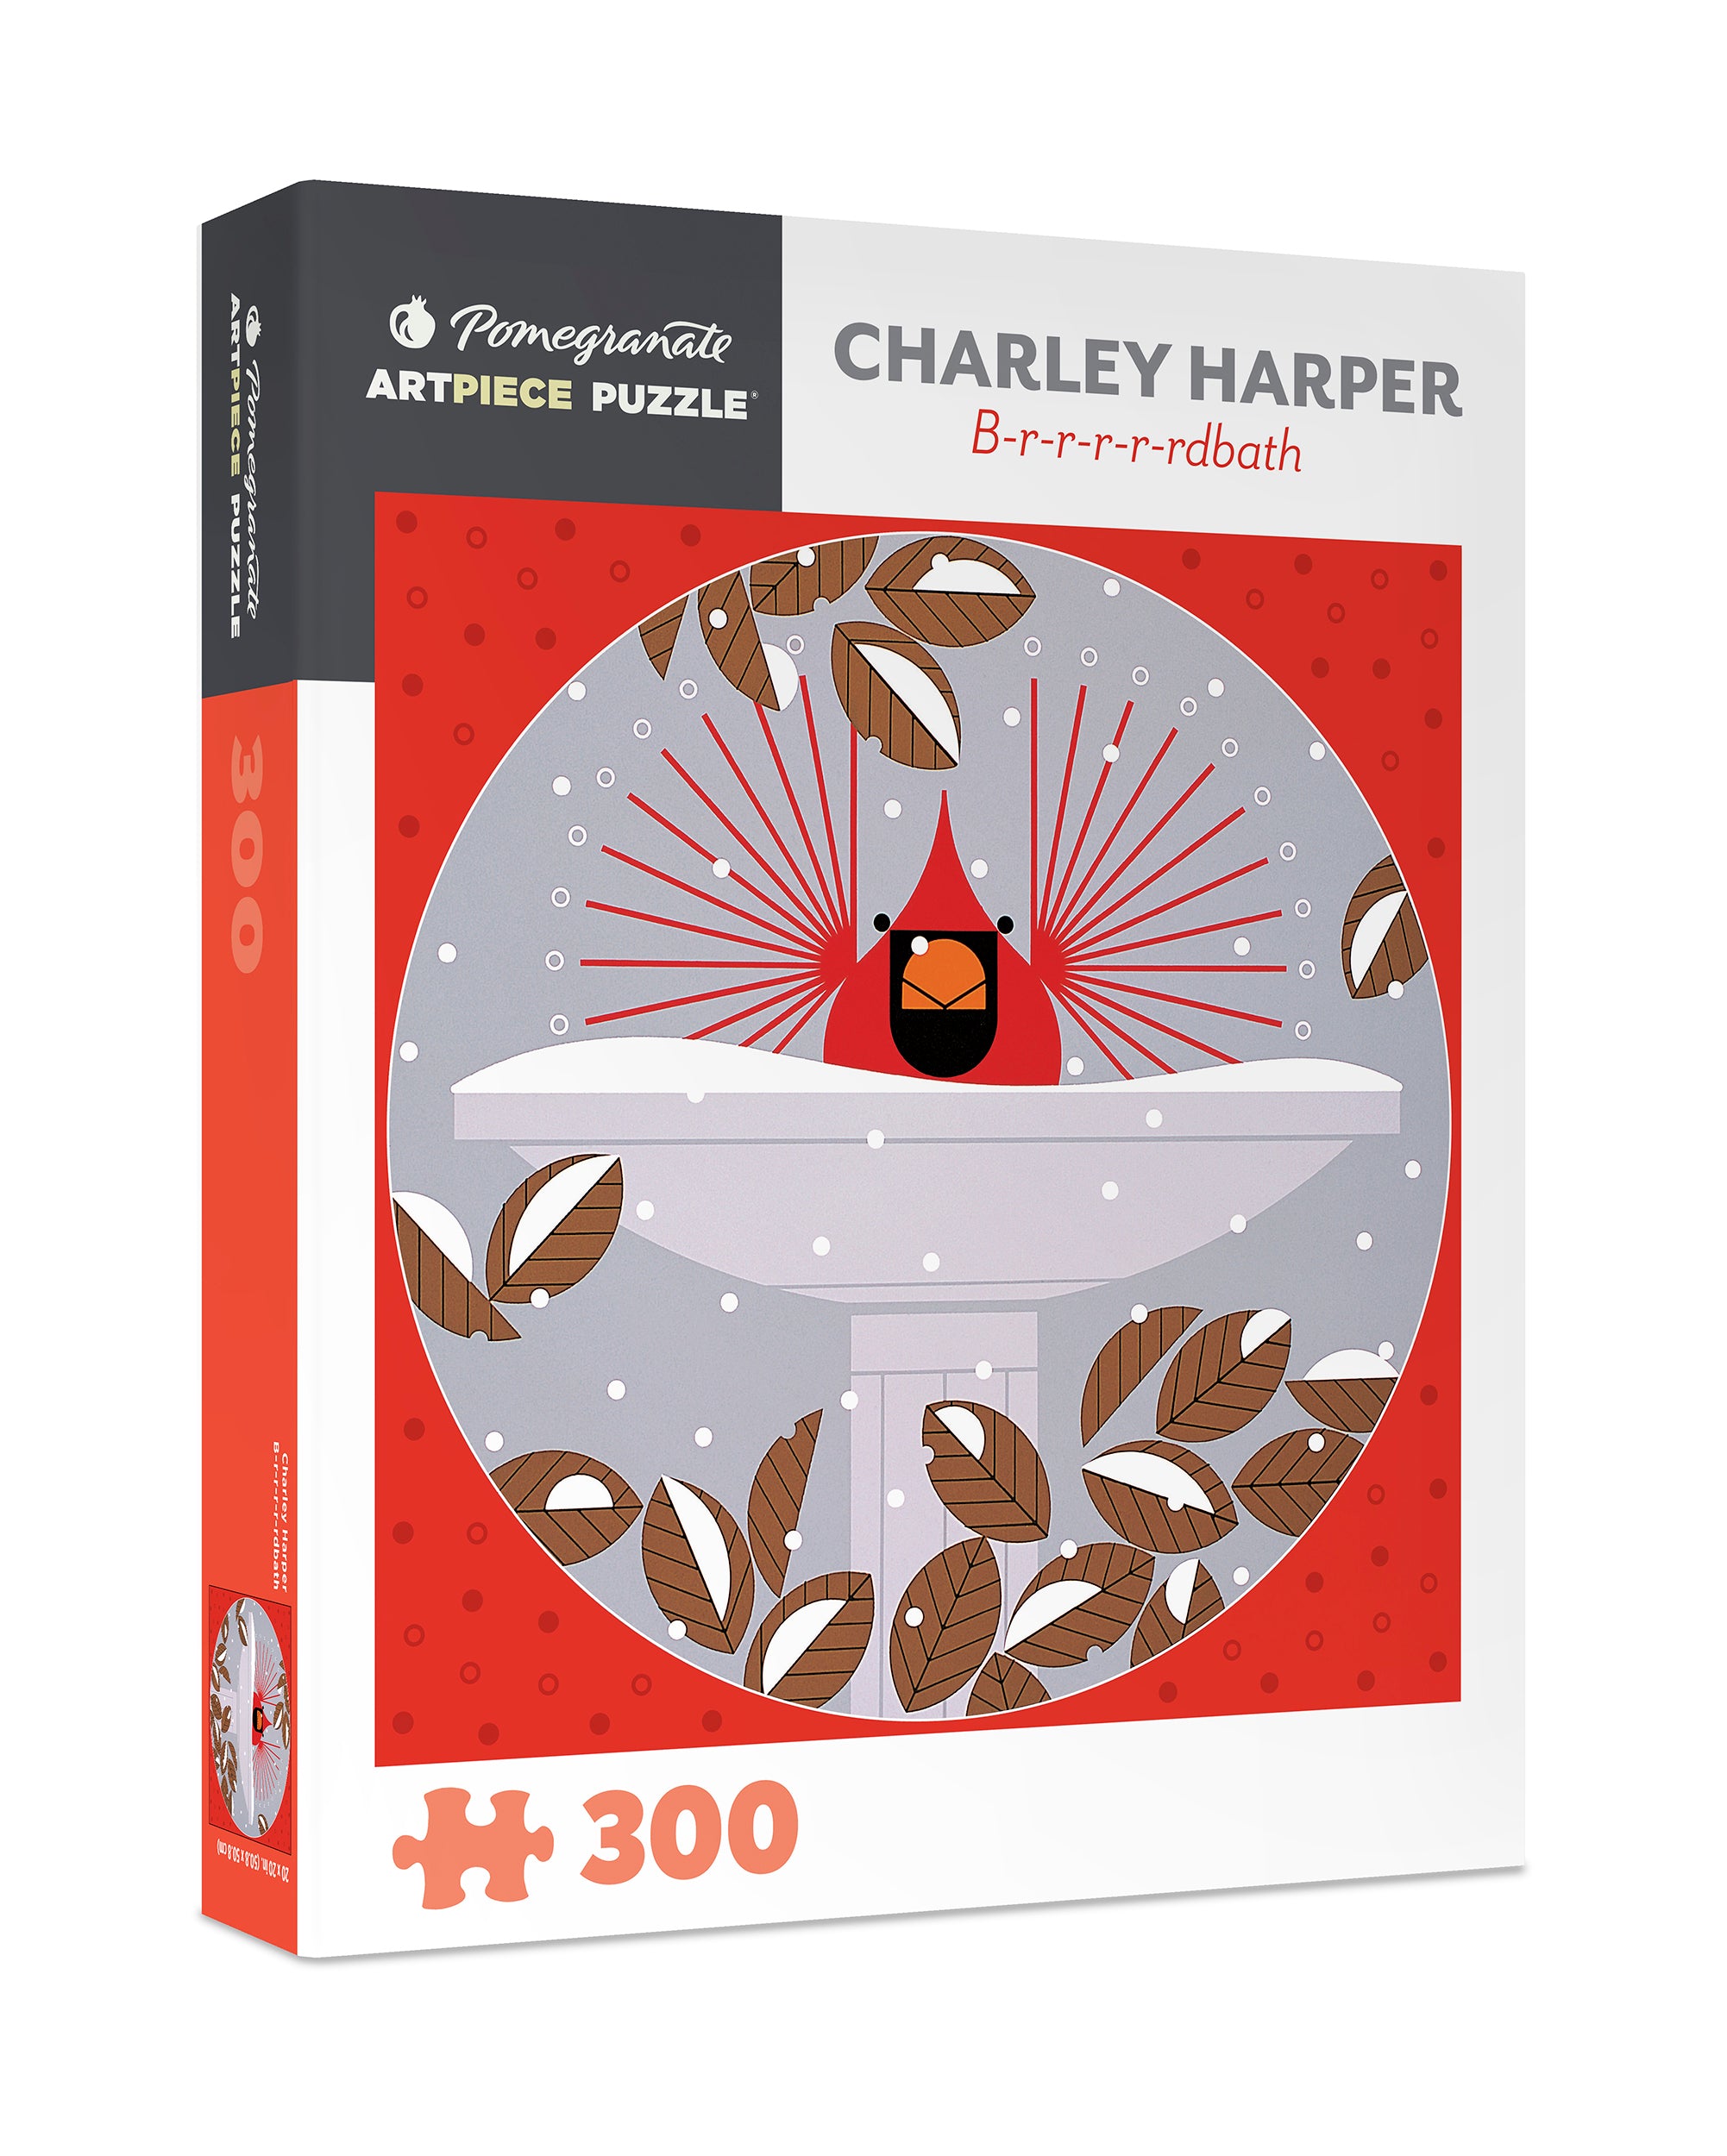 Charley Harper "Brrrrrdbath" 300-Piece Jigsaw Puzzle